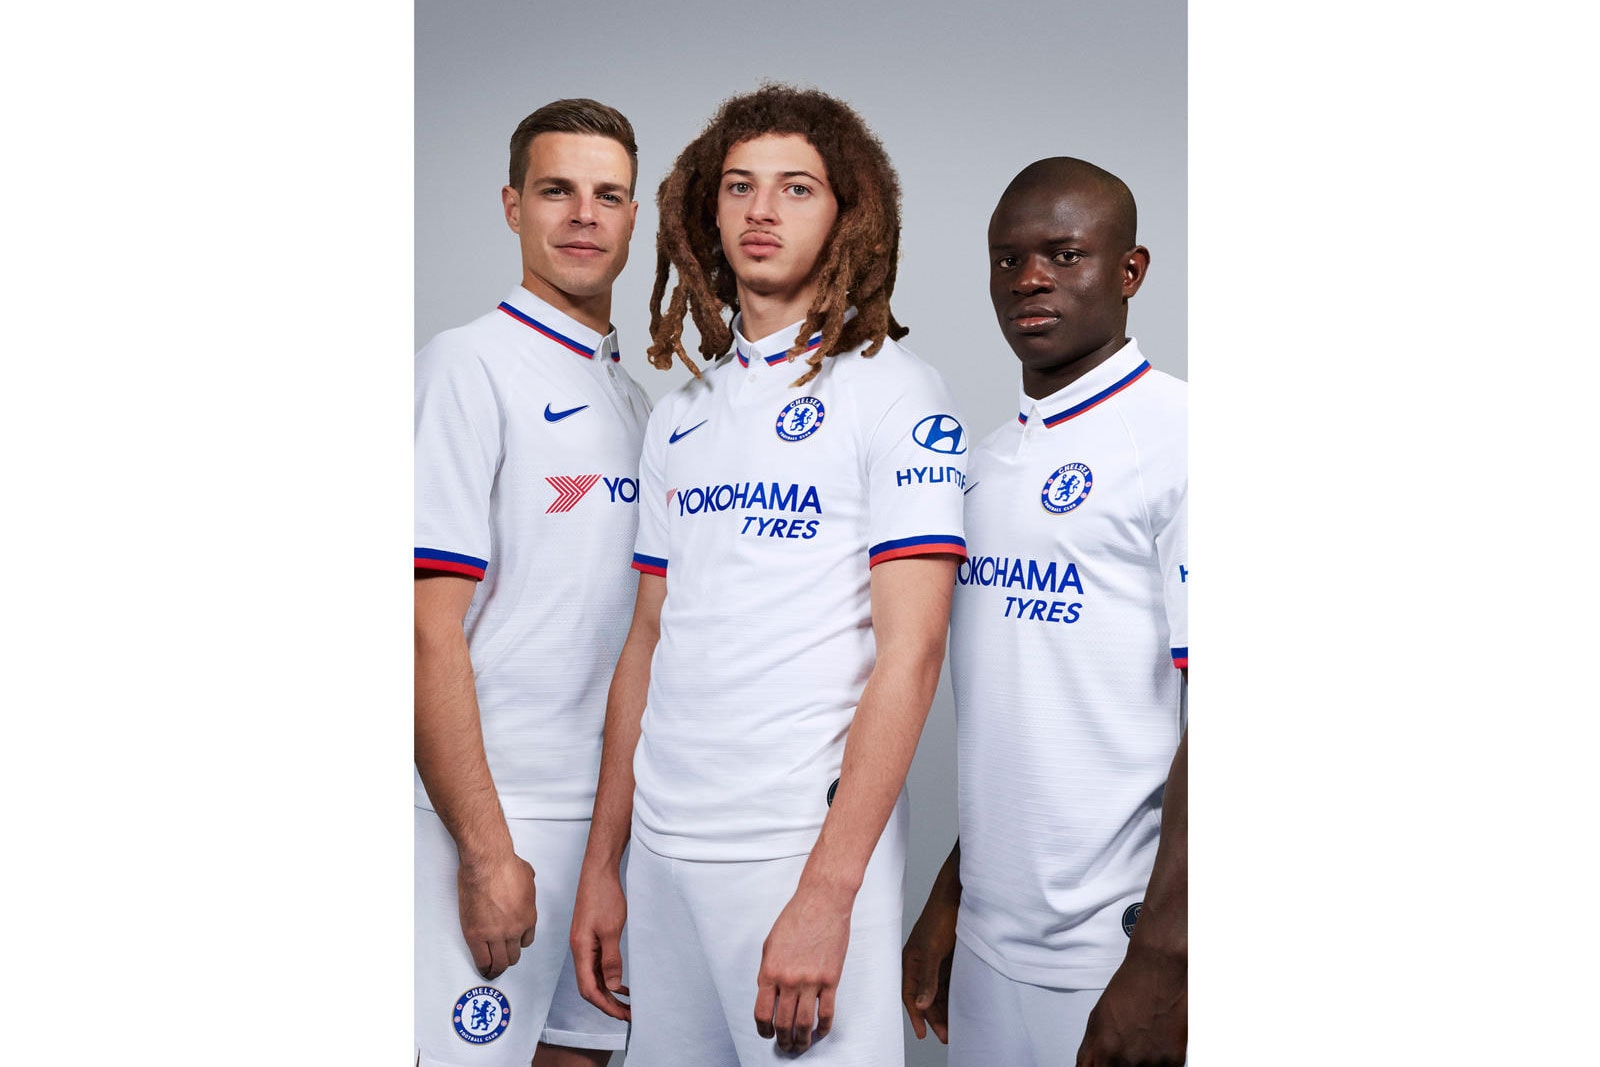 Chelsea 2019/20 Away Kits nike white mod 1960s white polo jersey collar top red blue Stamford Bridge frank lampard